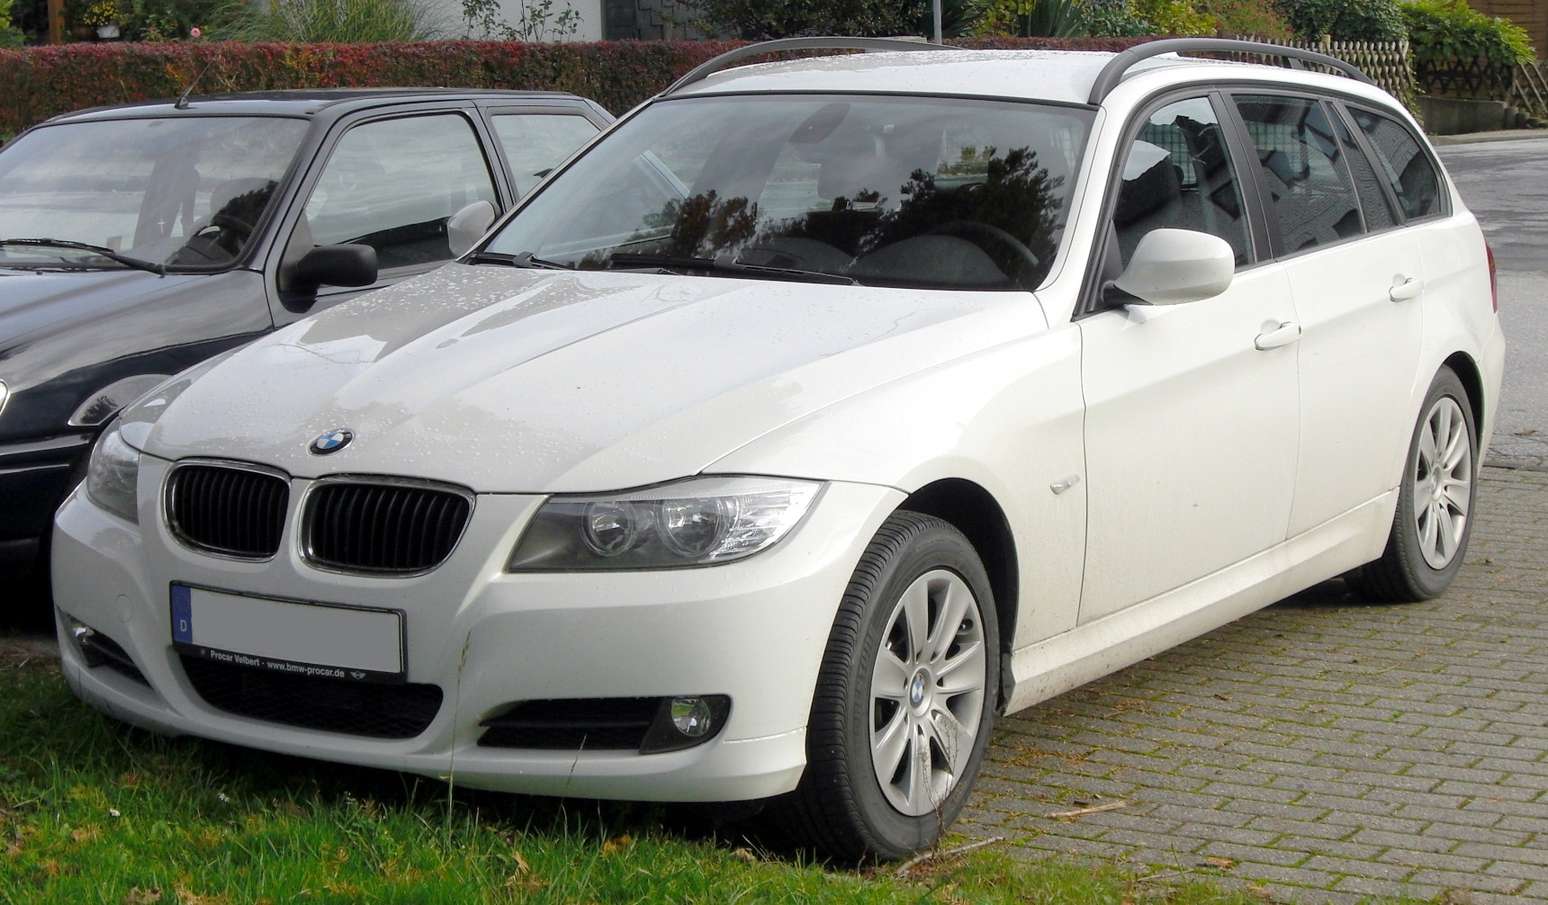 BMW 318i Touring